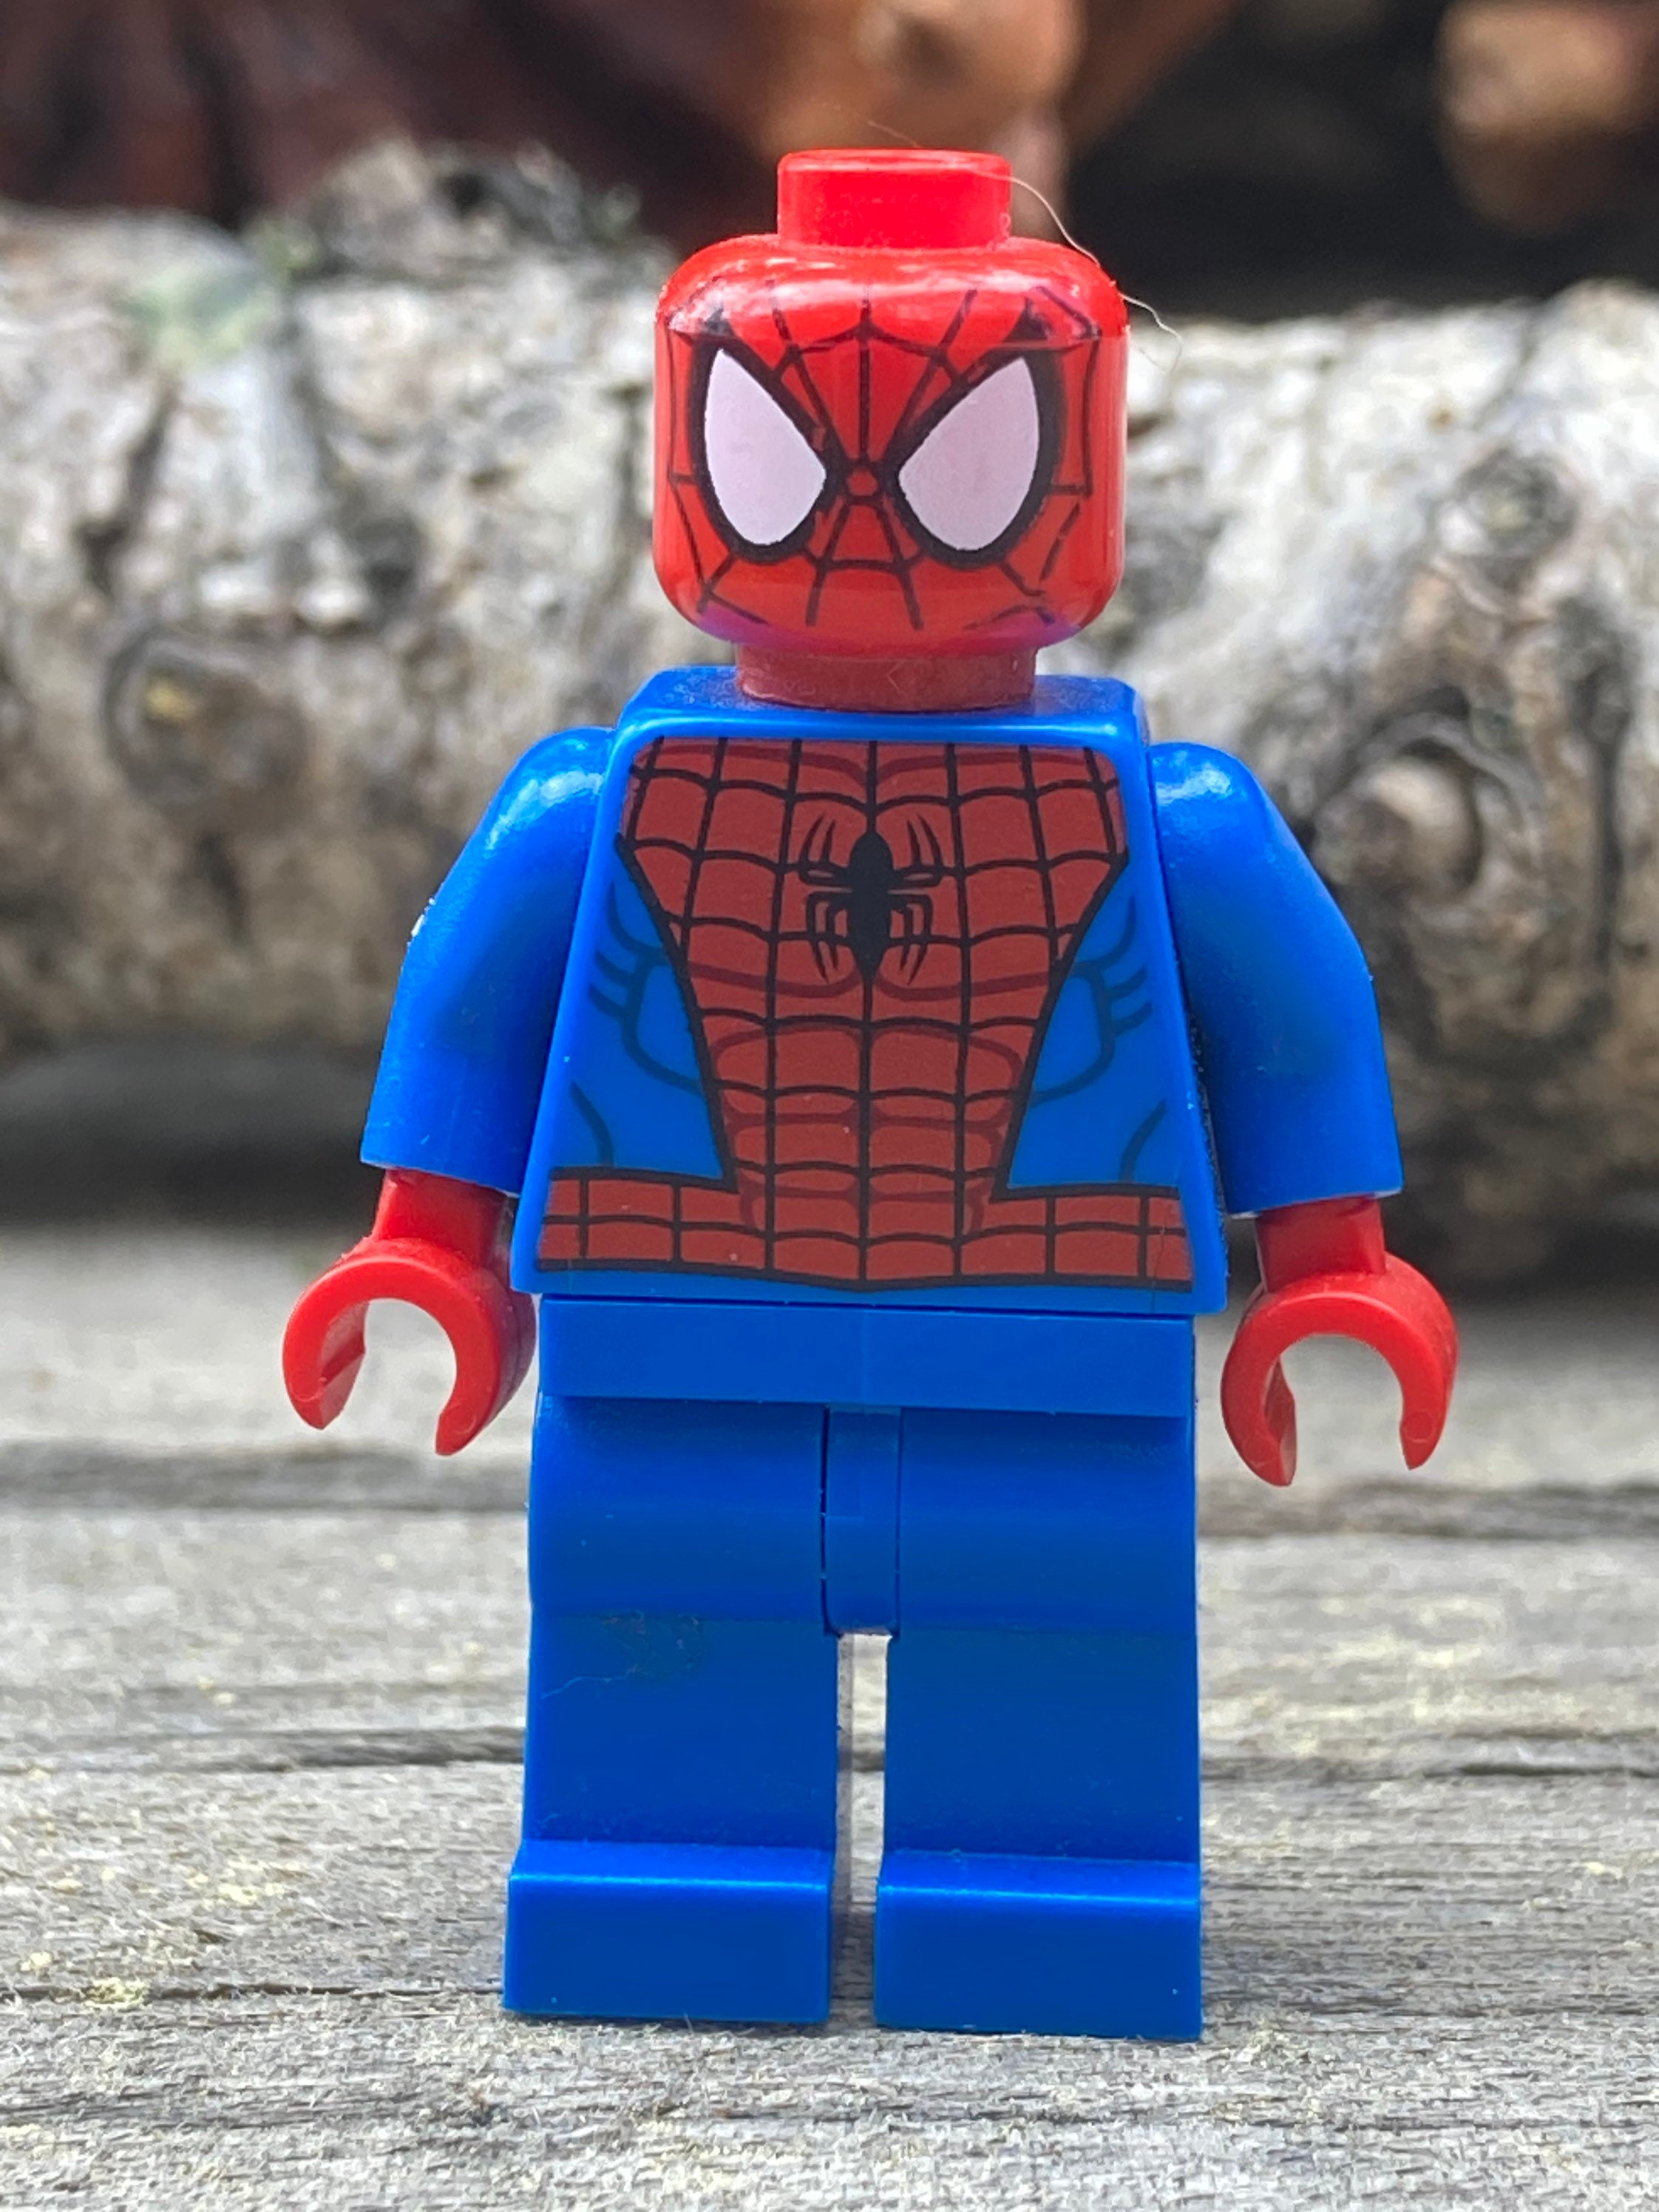 Spider-man Ultimate Black Web Pattern 76057 Super Hero LEGO Minifigure Figure 